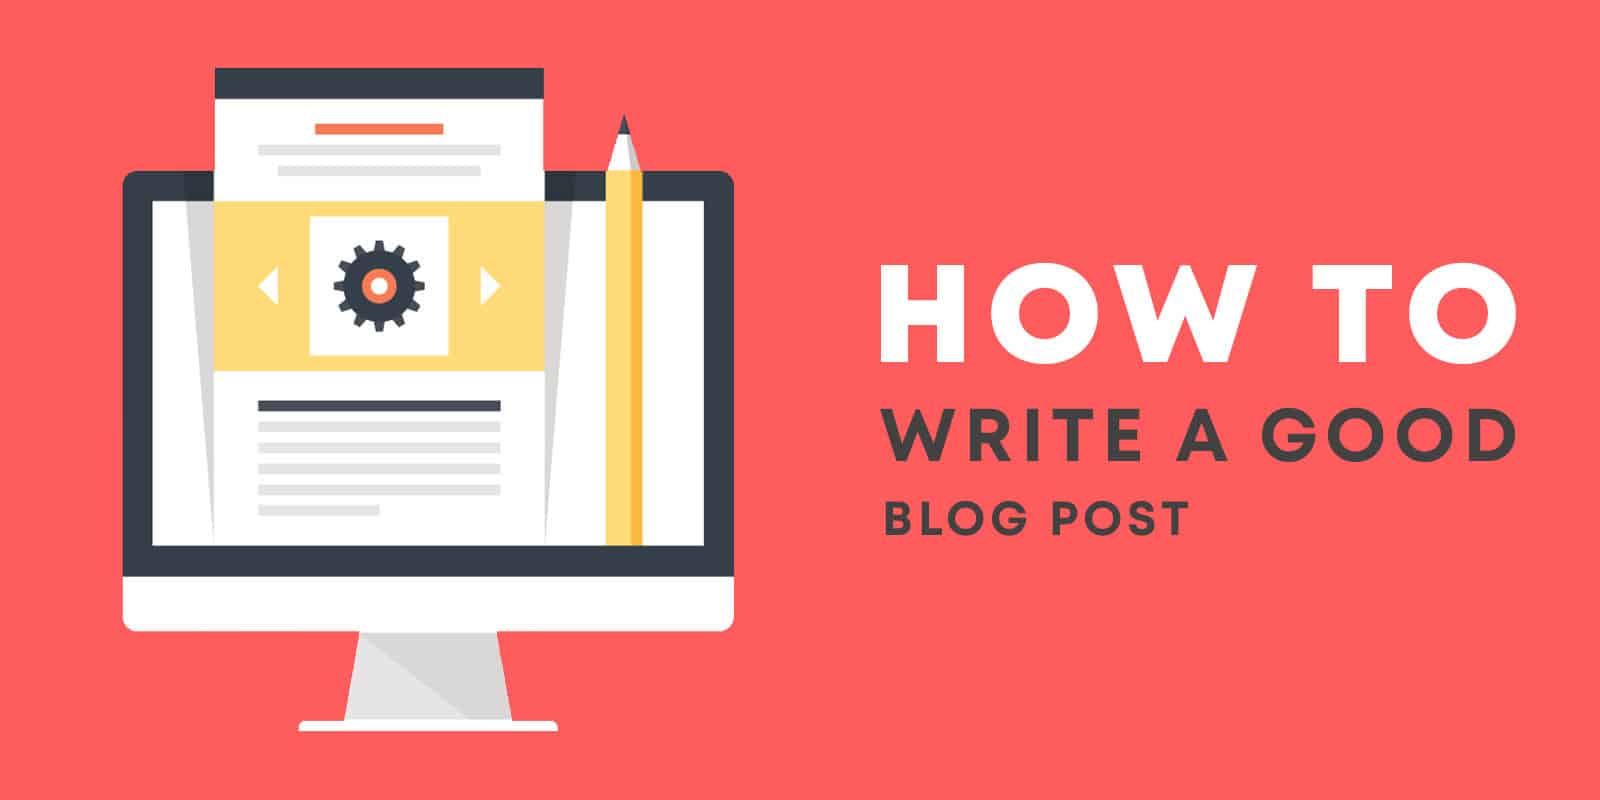 How do you write a post on a website?